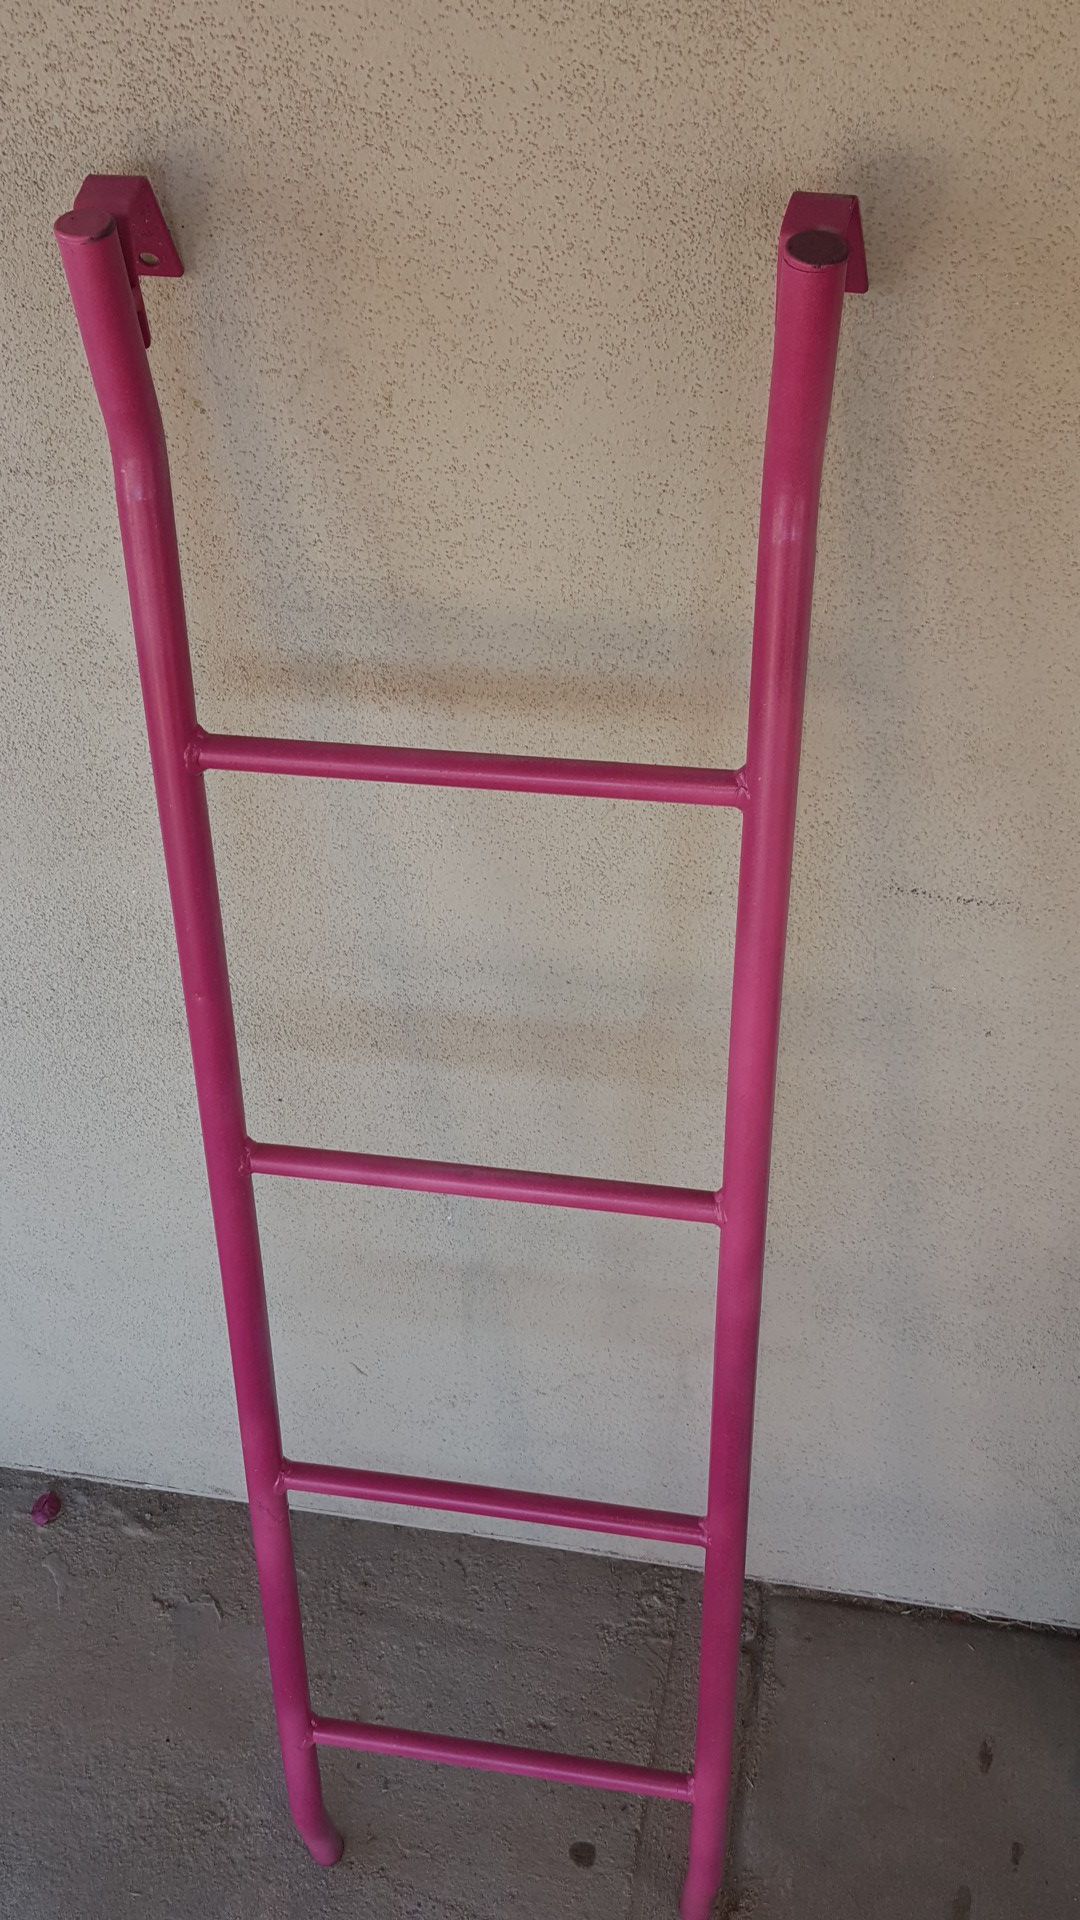 Extruded aluminum pink flamingo metal ladder bunk bed